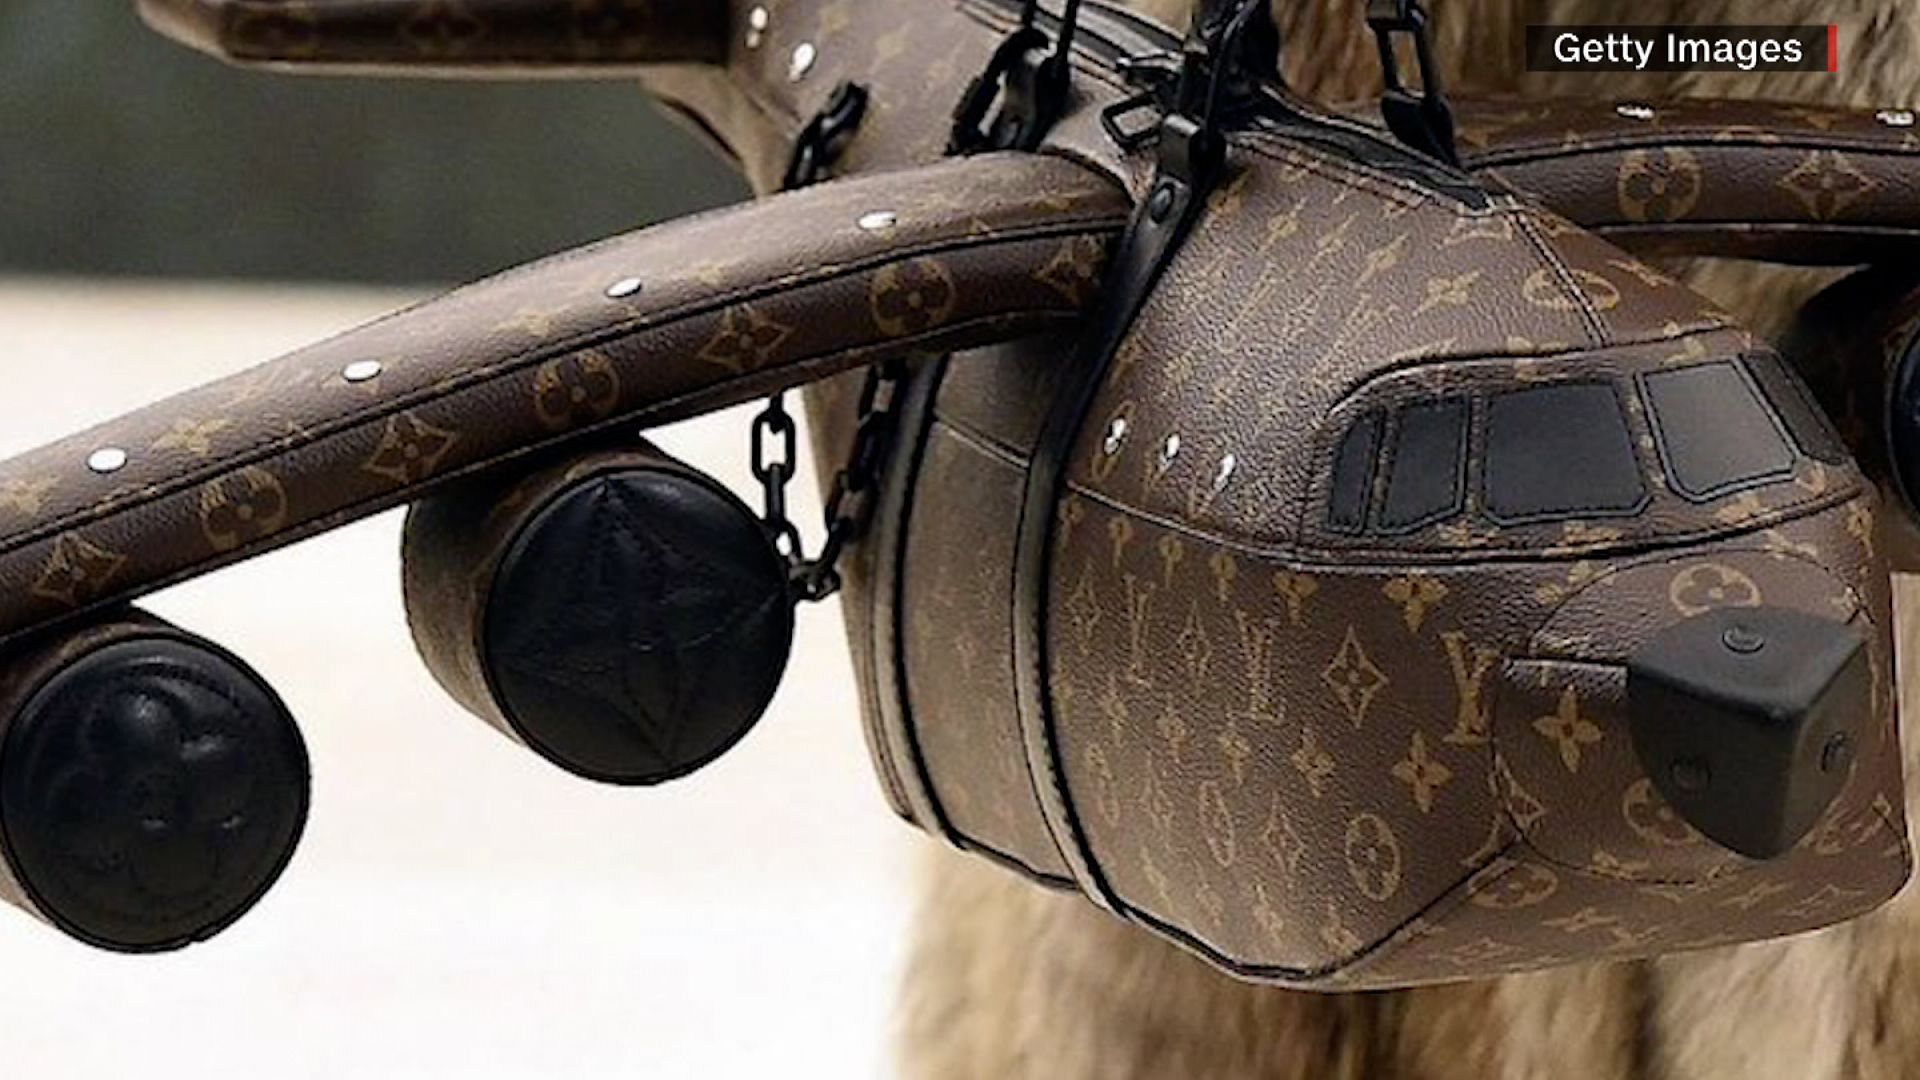 Louis Vuitton Plane Shaped Handbag For $39,000 - LoyaltyLobby